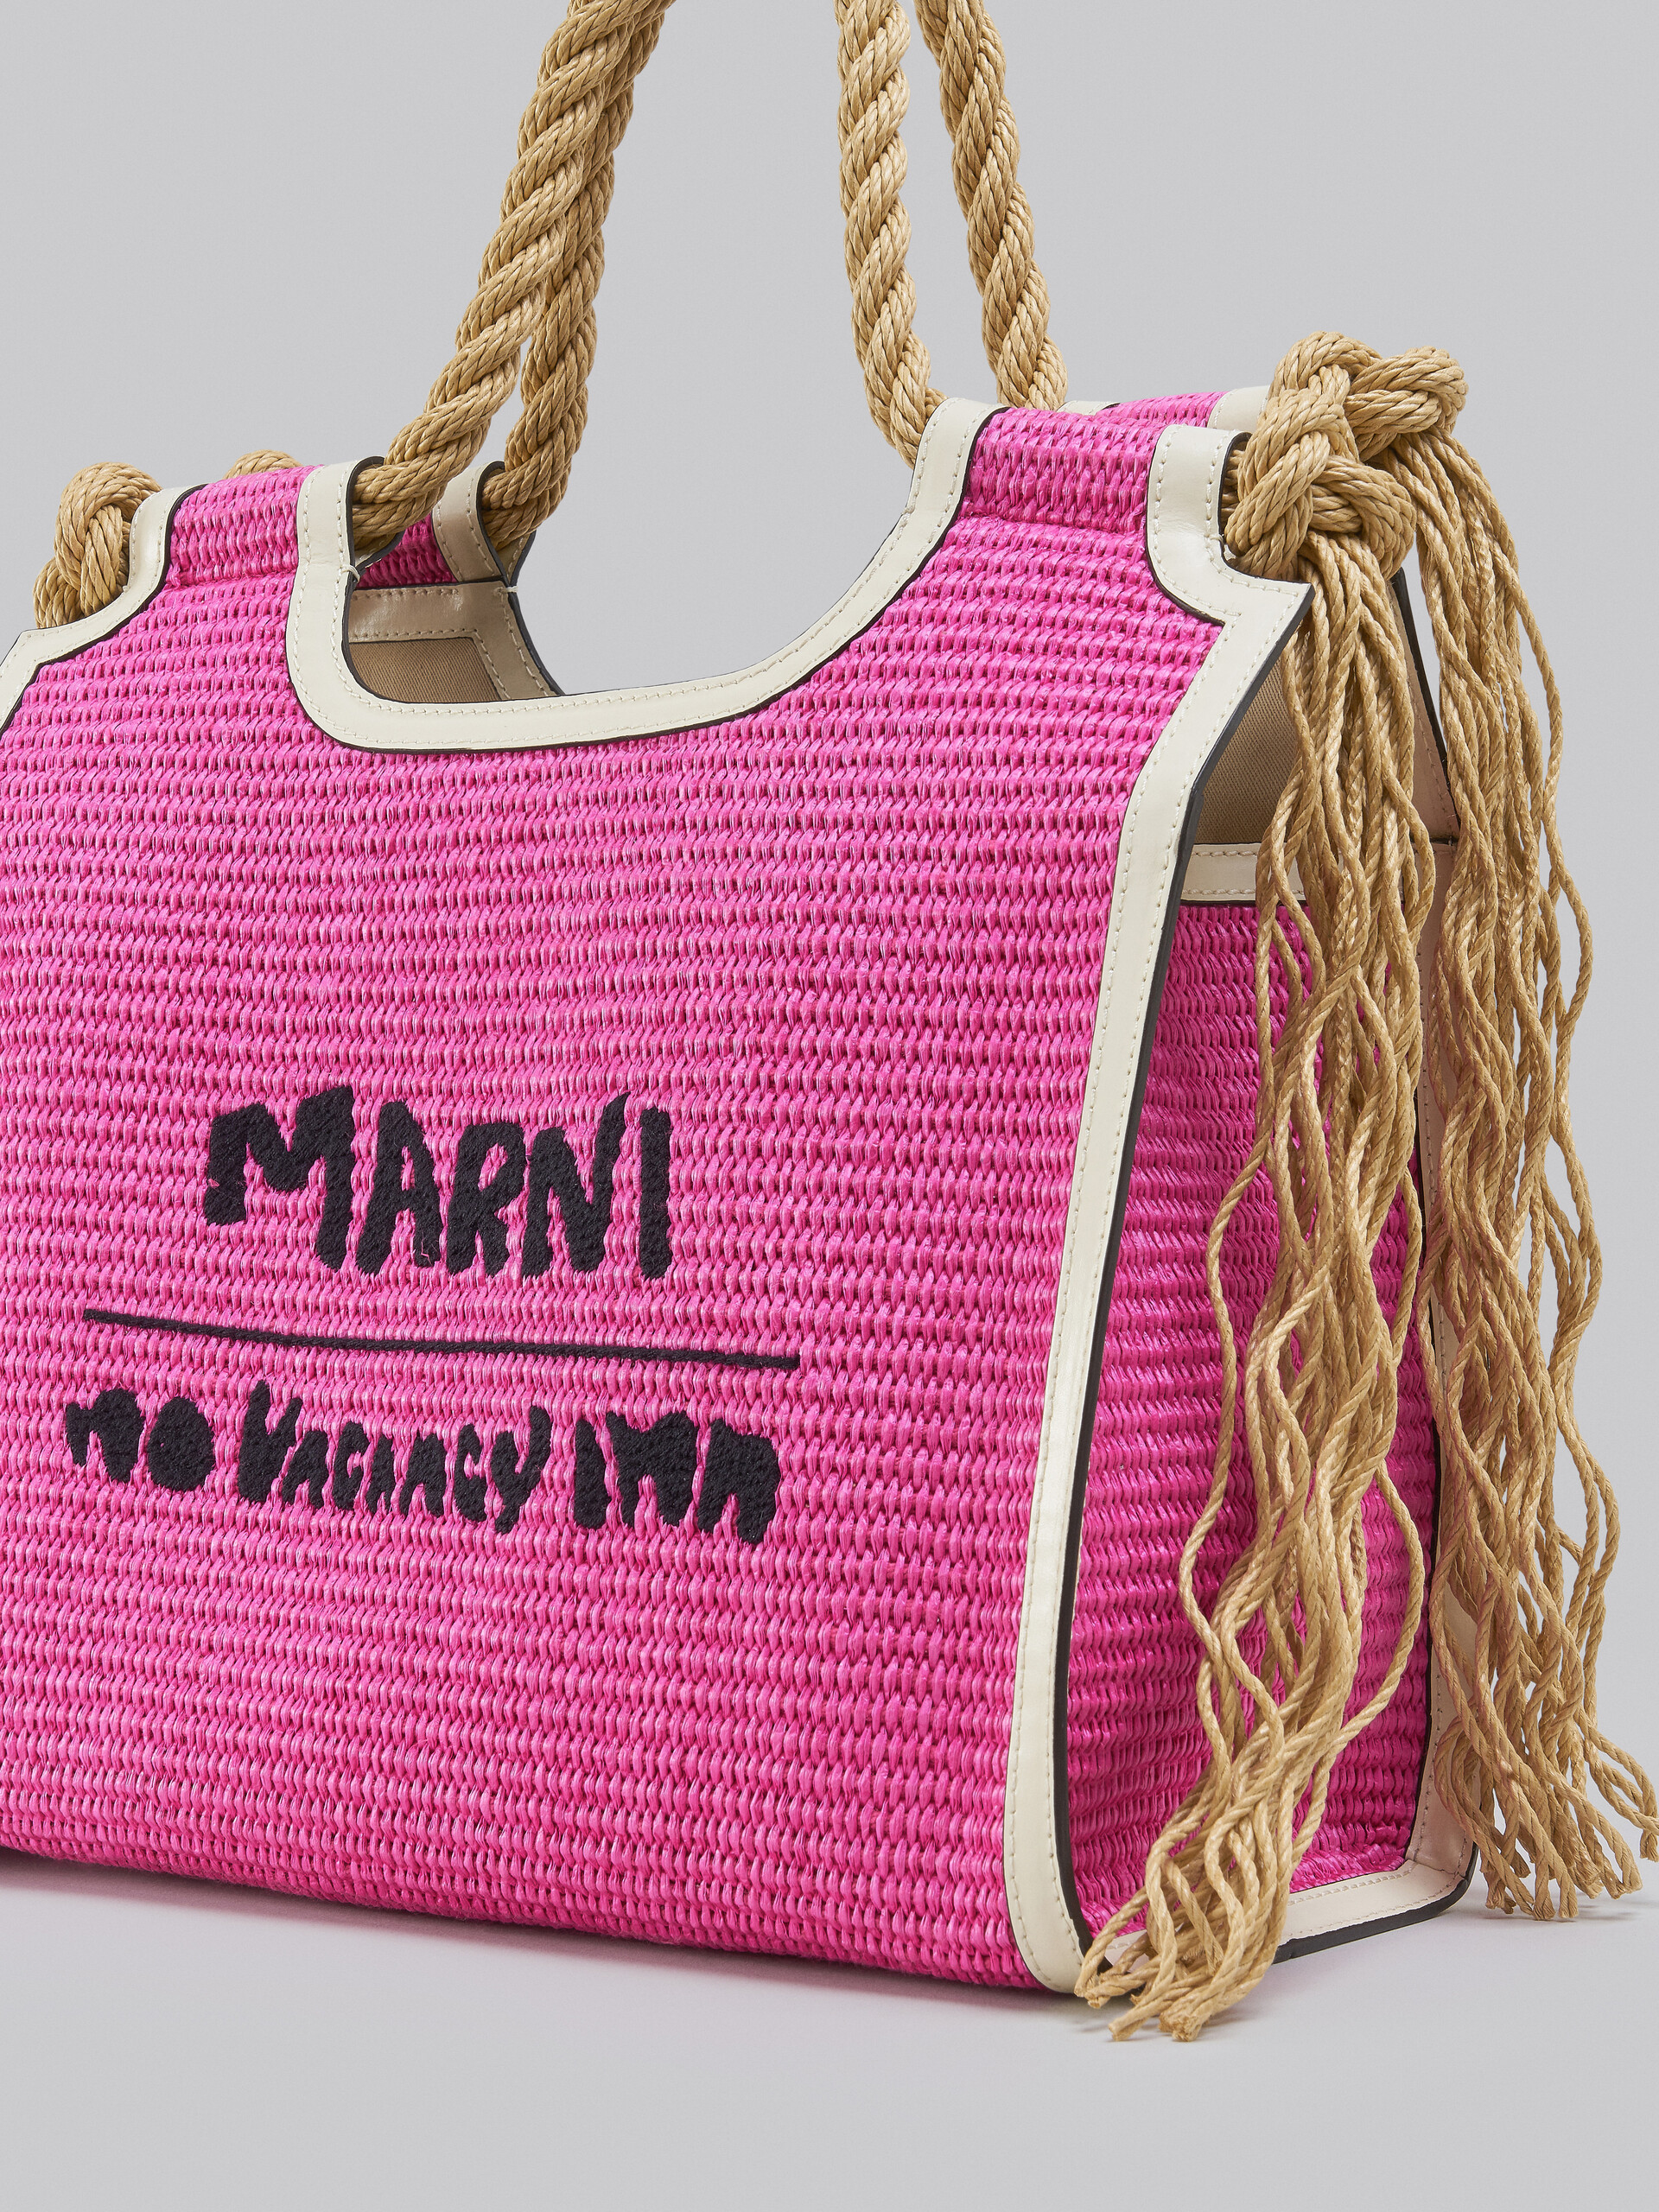 Marni x No Vacancy Inn - Marcel Tote Bag in pink raffia with white trims - Handbag - Image 5